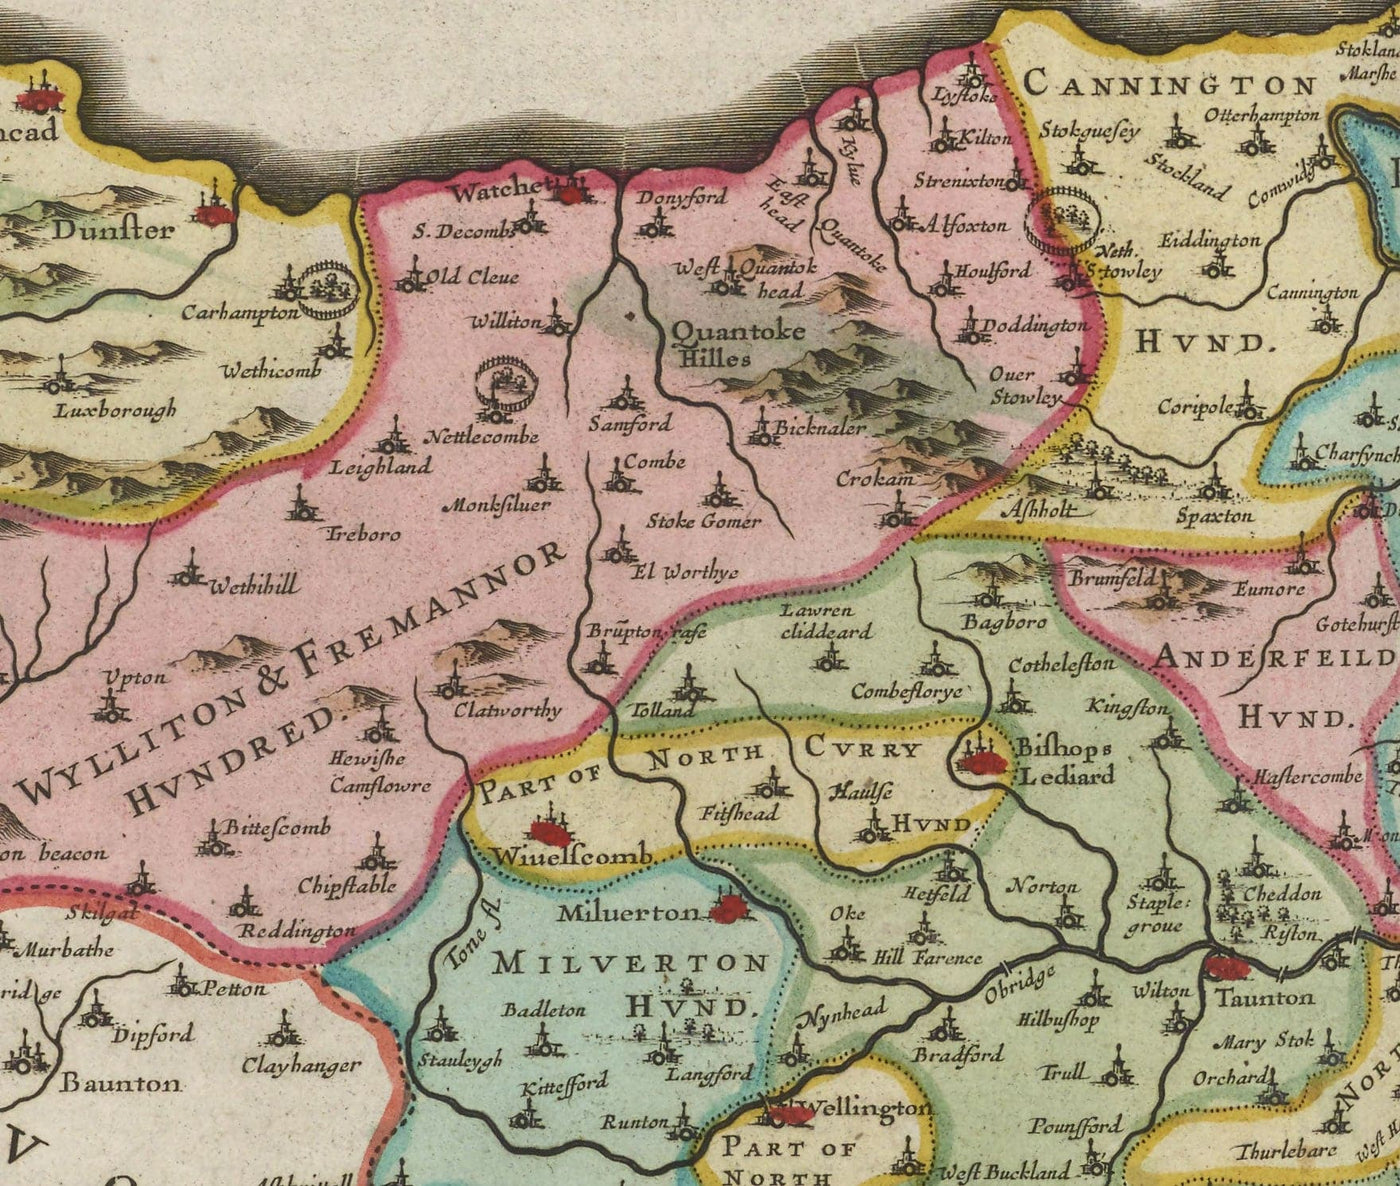 Old Map of Somerset in 1665 by Joan Blaeu - Bath, Bristol, Portishead, Weston-super-Mare, Taunton, Yeovil